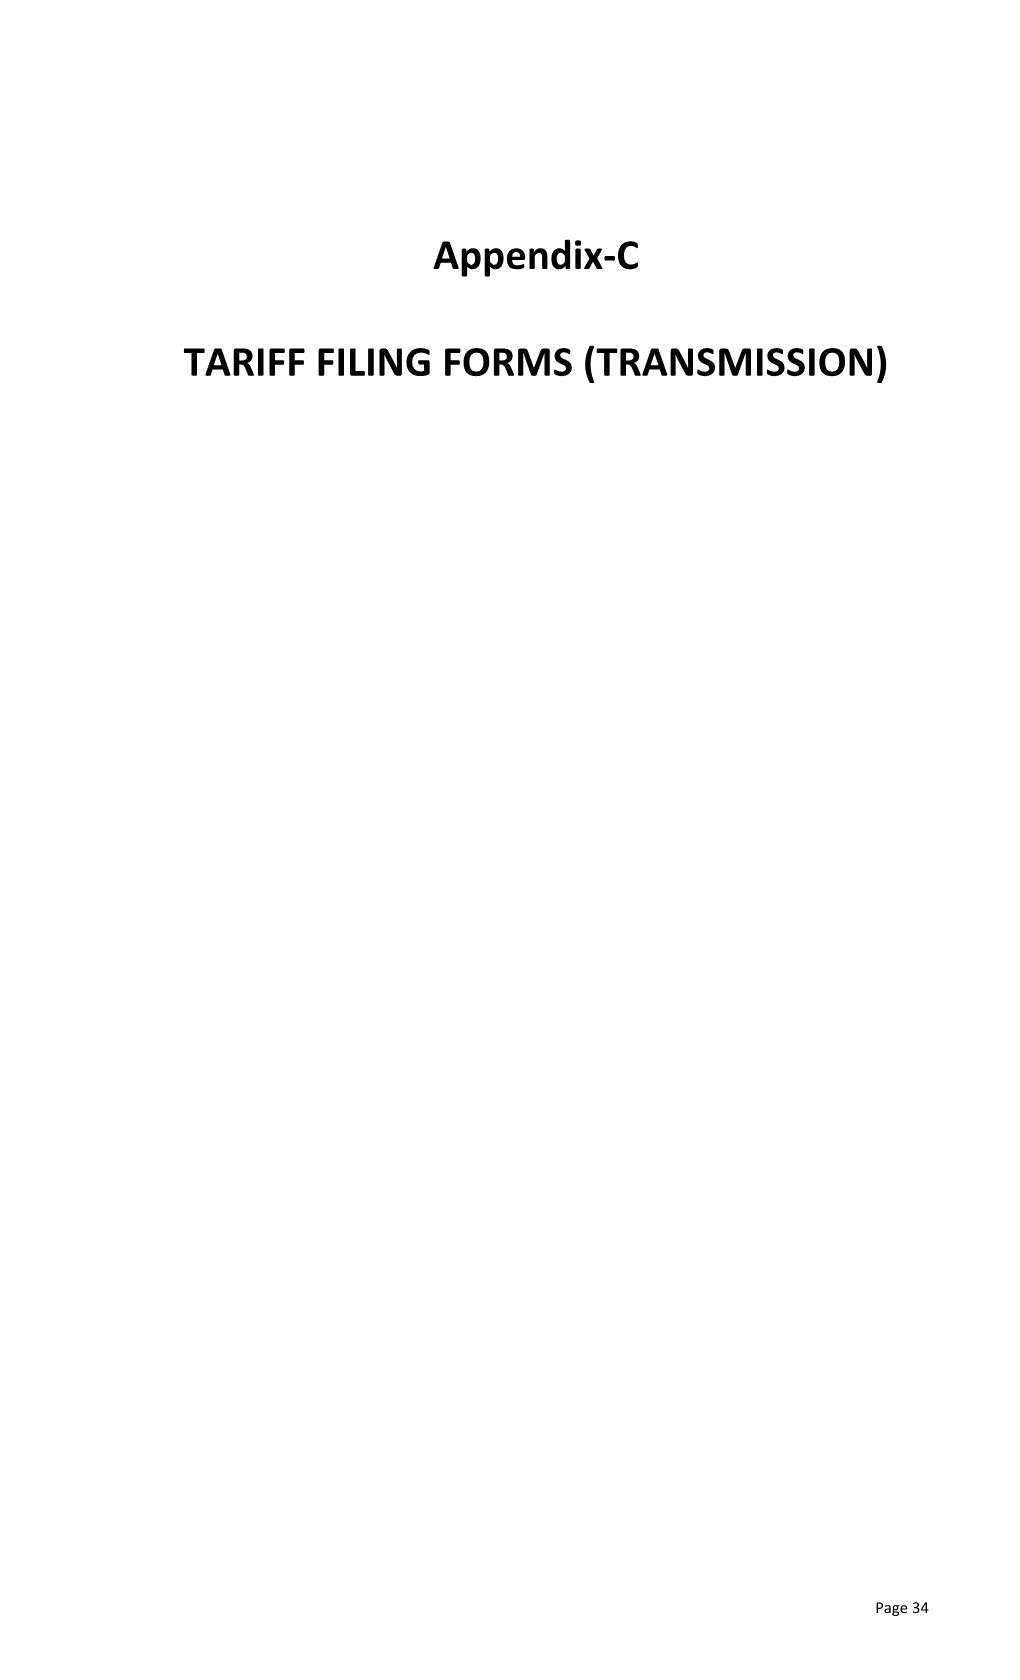 Appendix-C TARIFF FILING FORMS (TRANSMISSION)